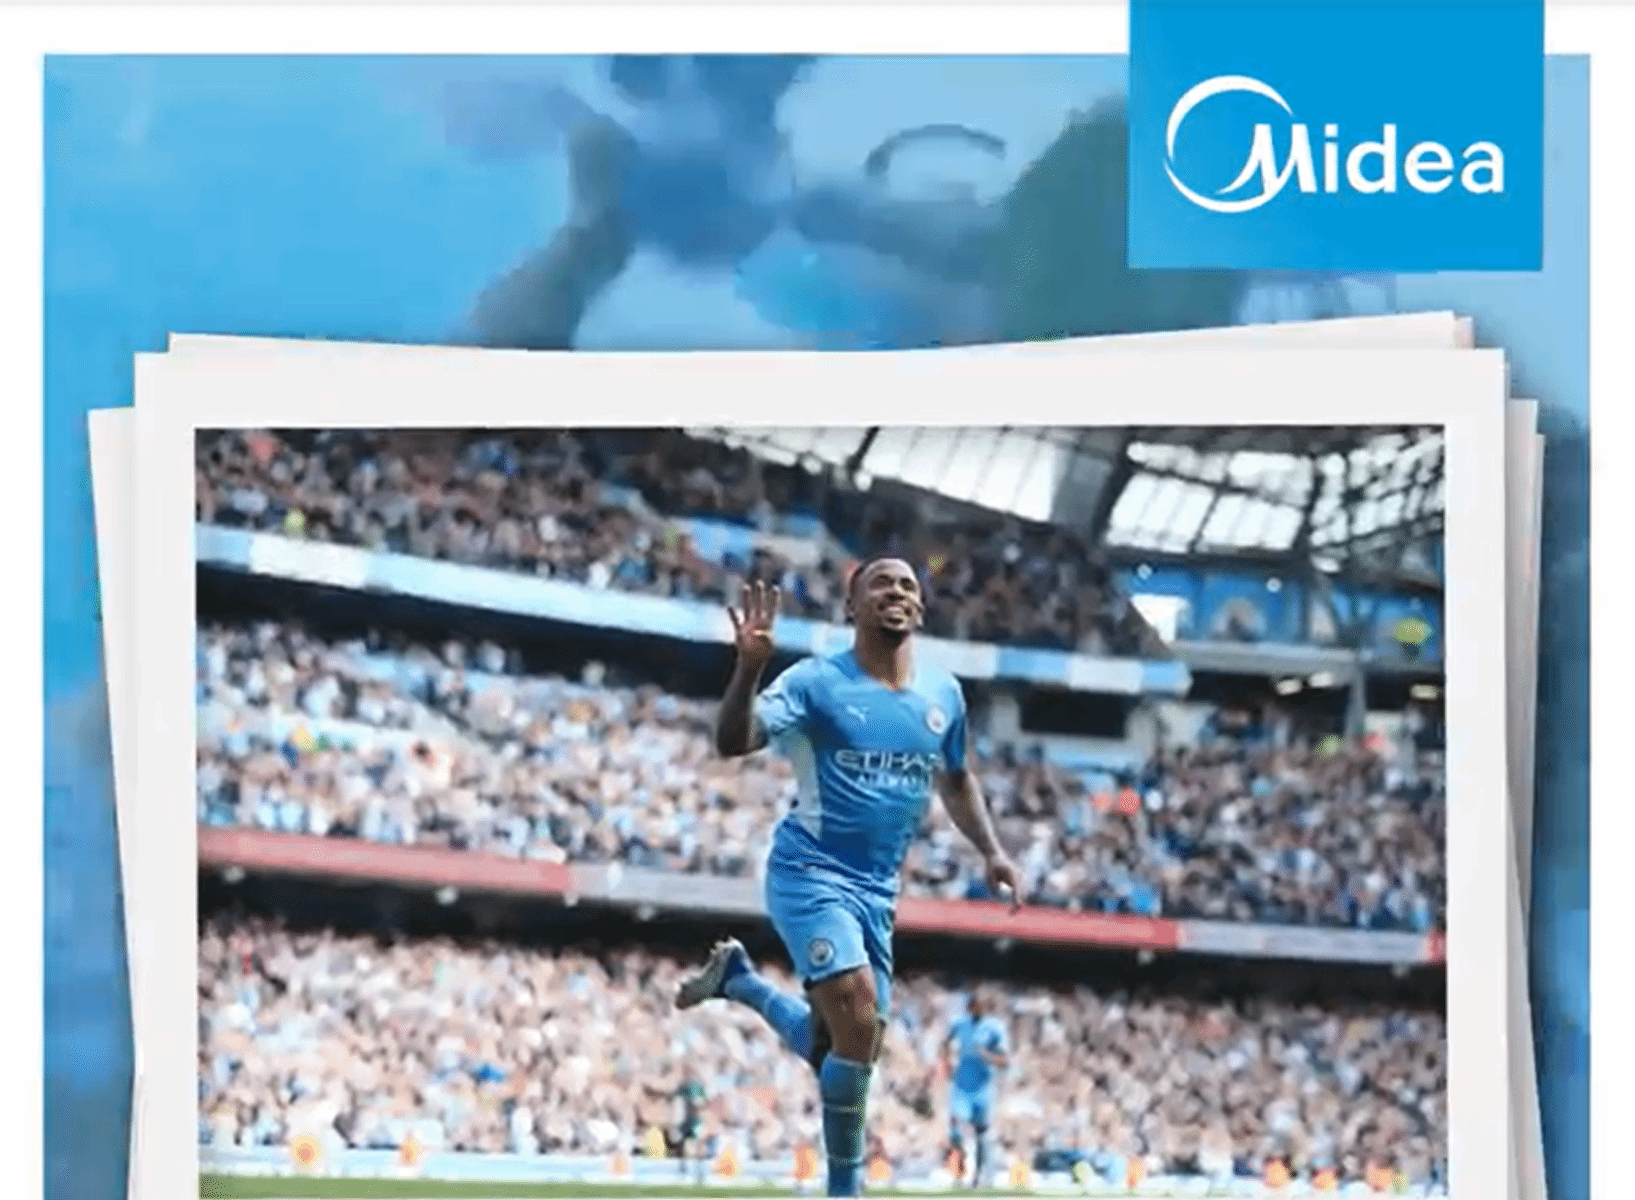 Midea & ManchesterCity Sponsorship